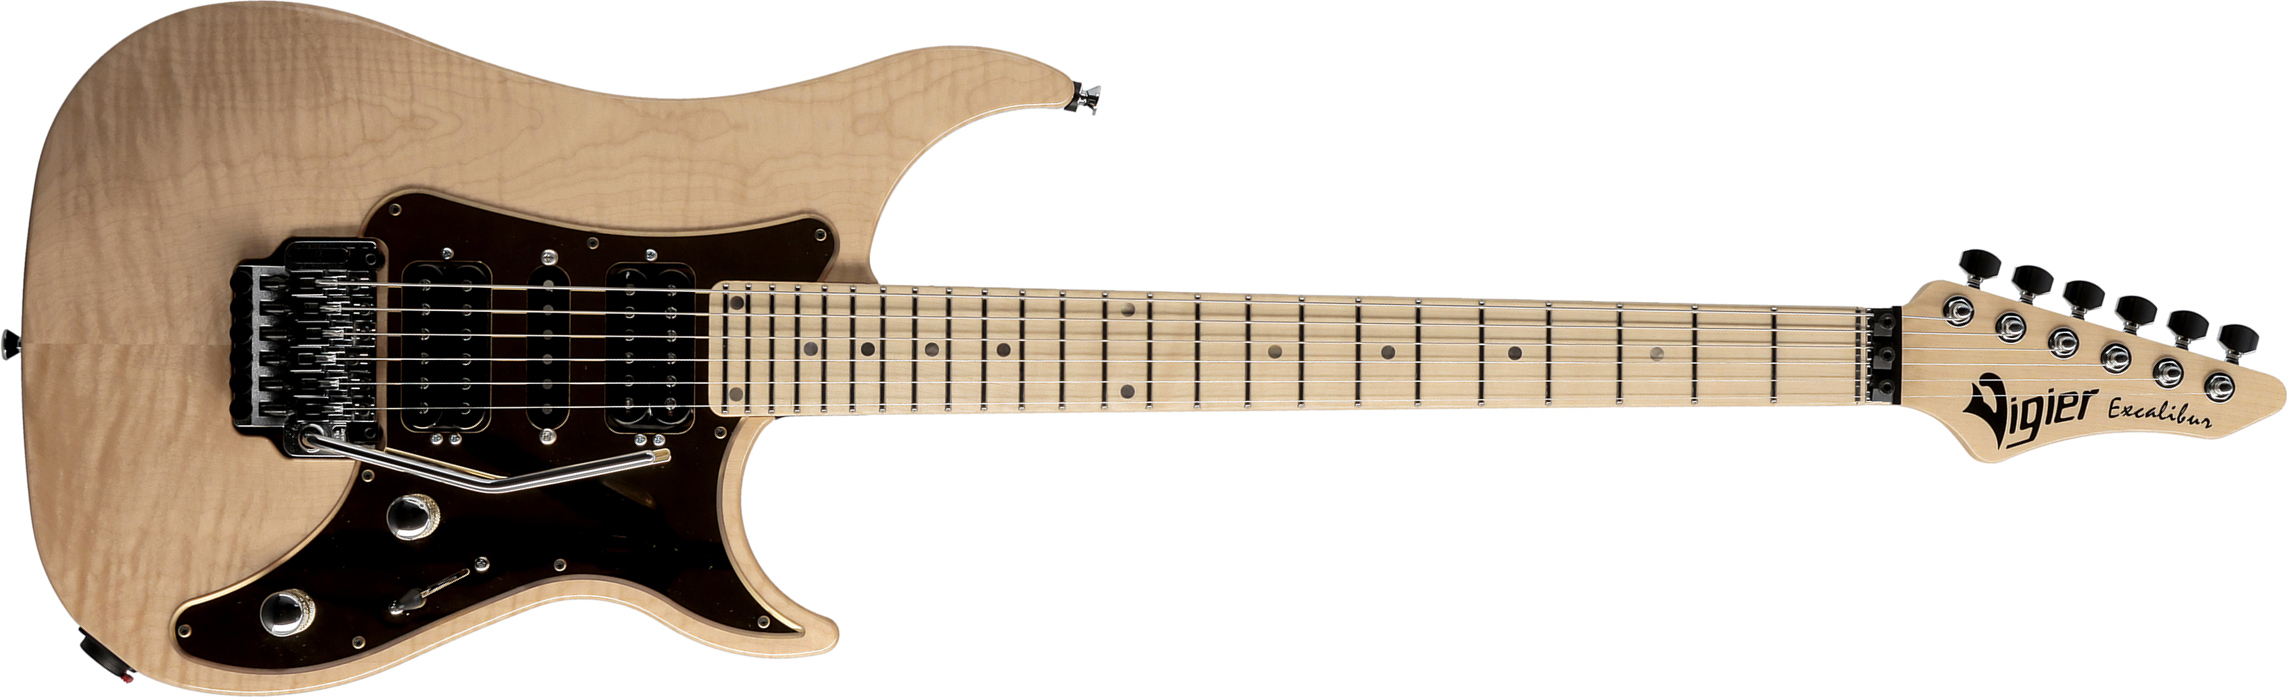 Vigier Excalibur Custom Hsh Fr Mn - Natural Maple - Elektrische gitaar in Str-vorm - Main picture